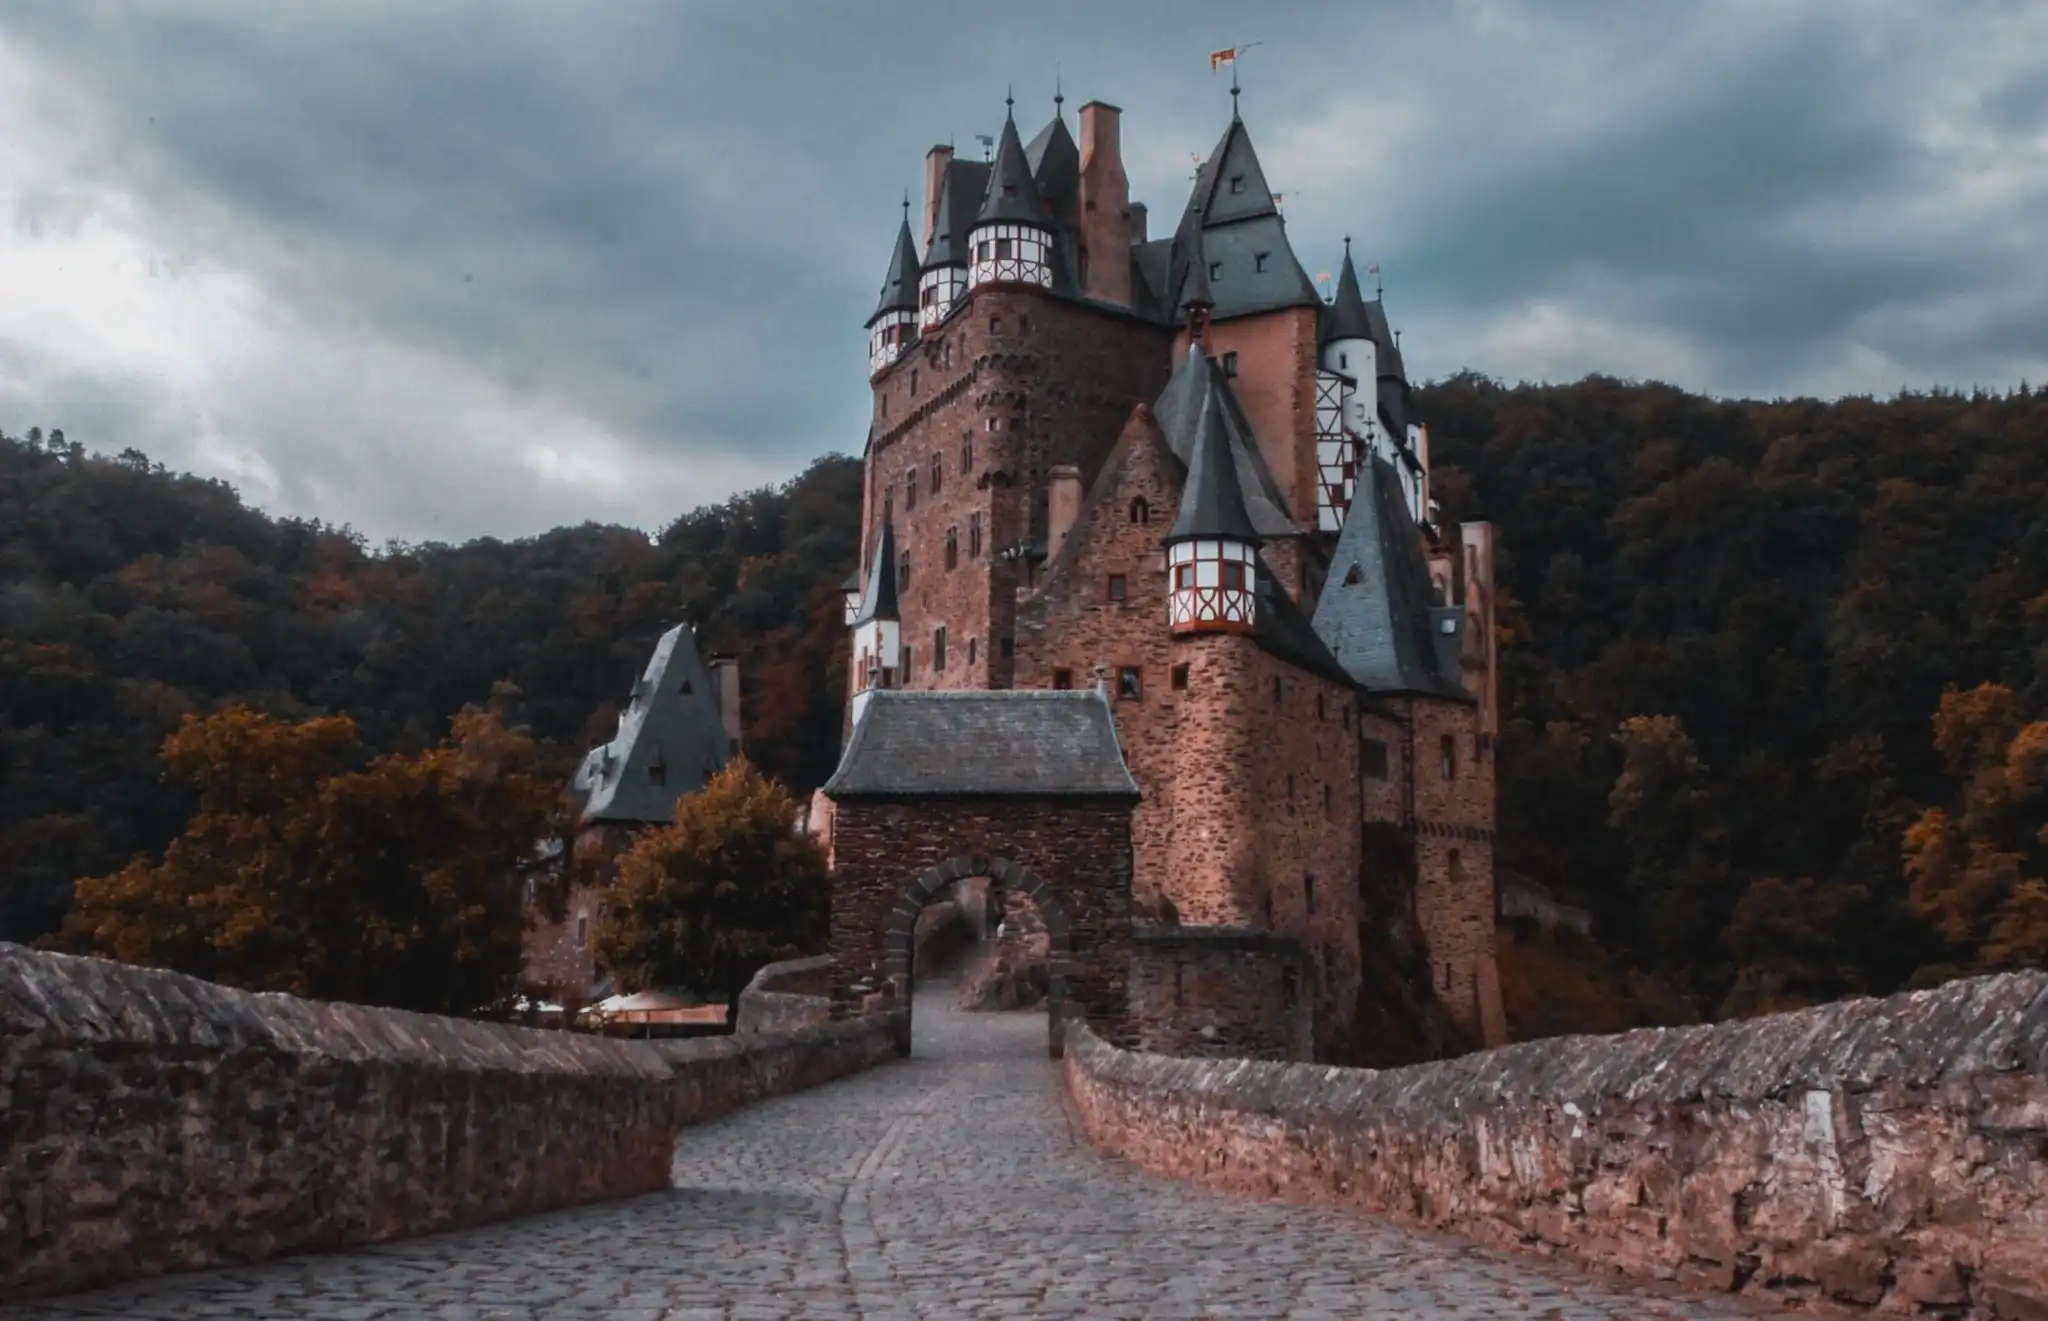 Burg Eltz castle, Germany